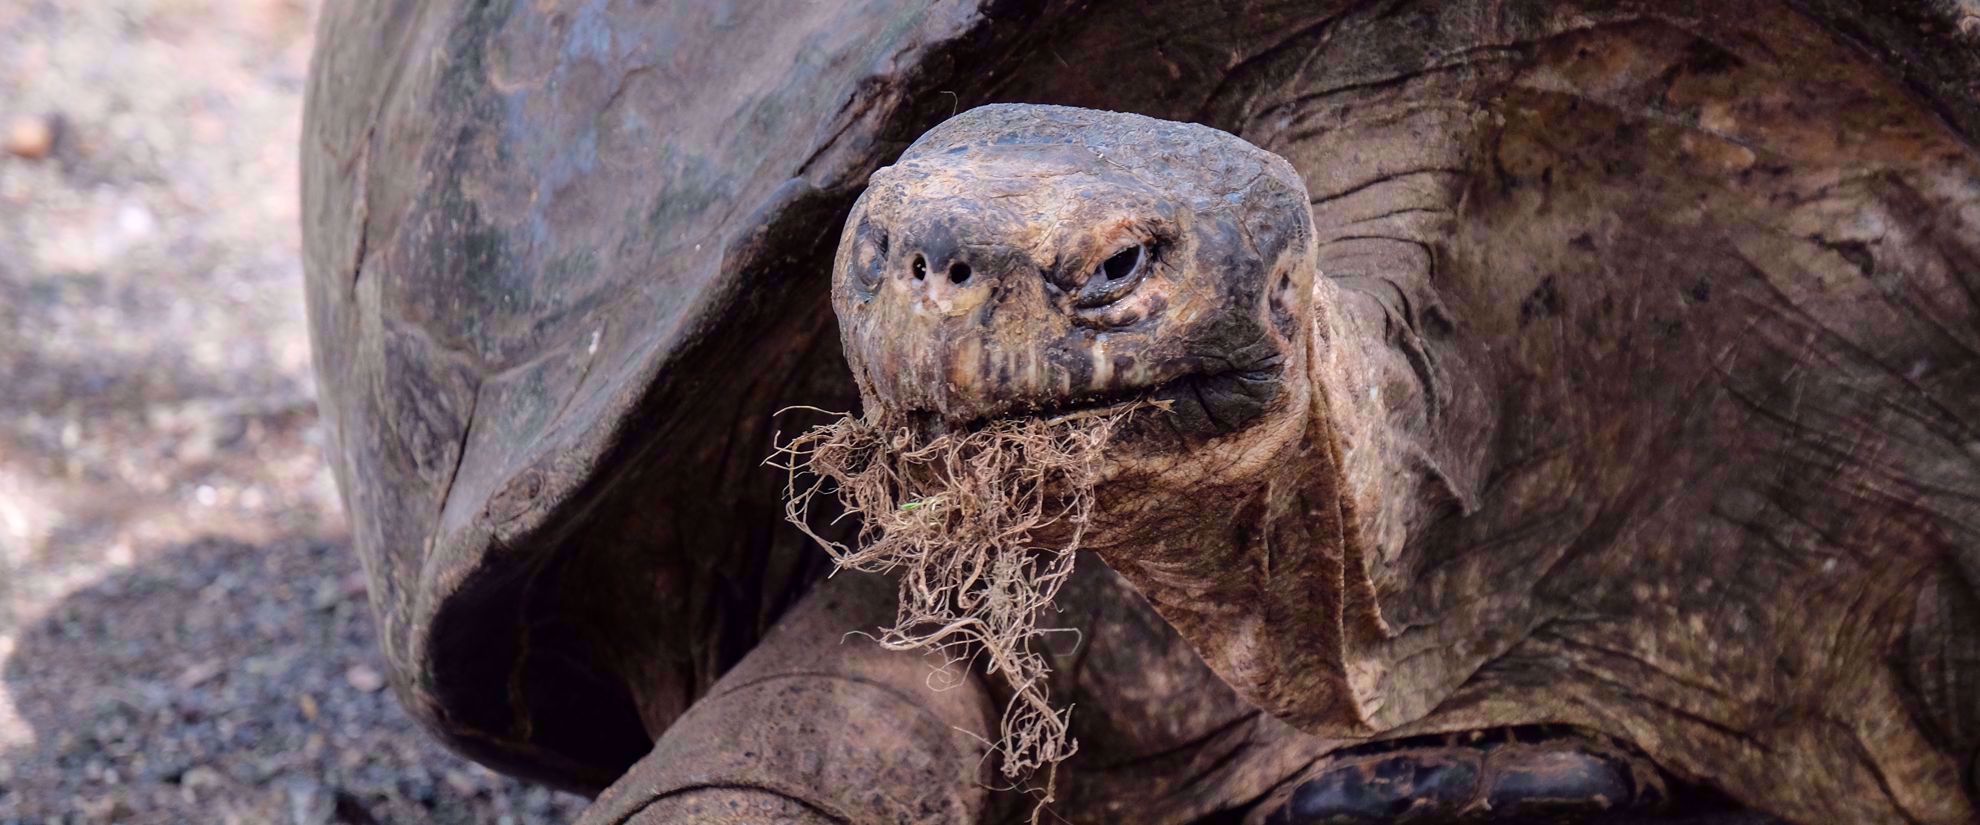 tortoise eating snack on galapagos islands